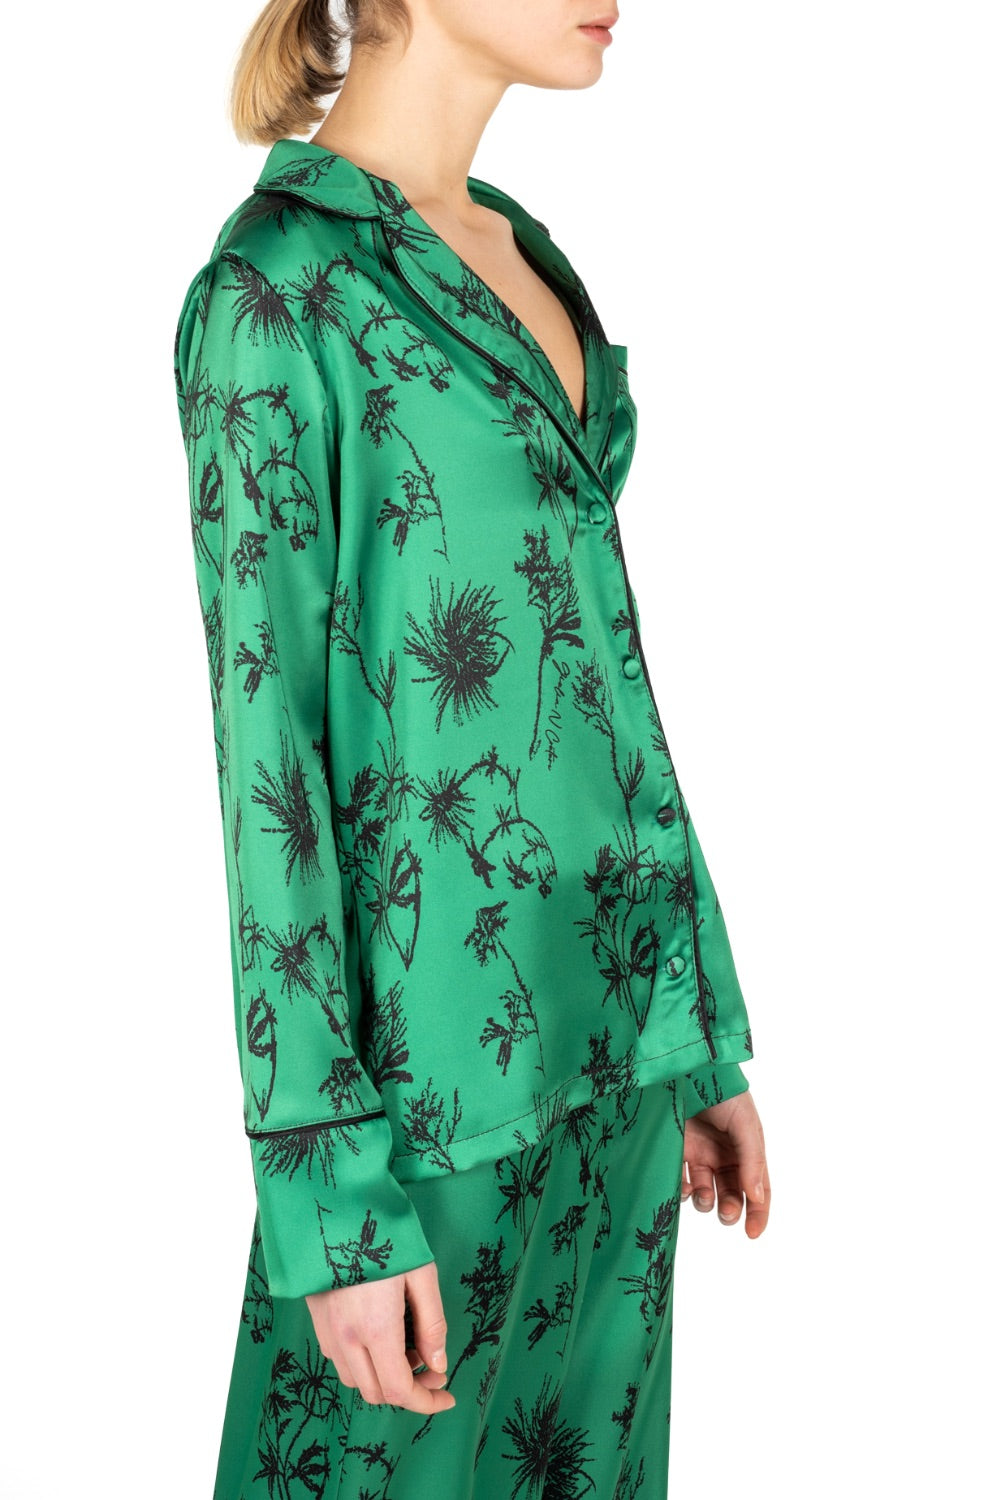 GIULIA N COUTURE® Camicia Verde Floreale